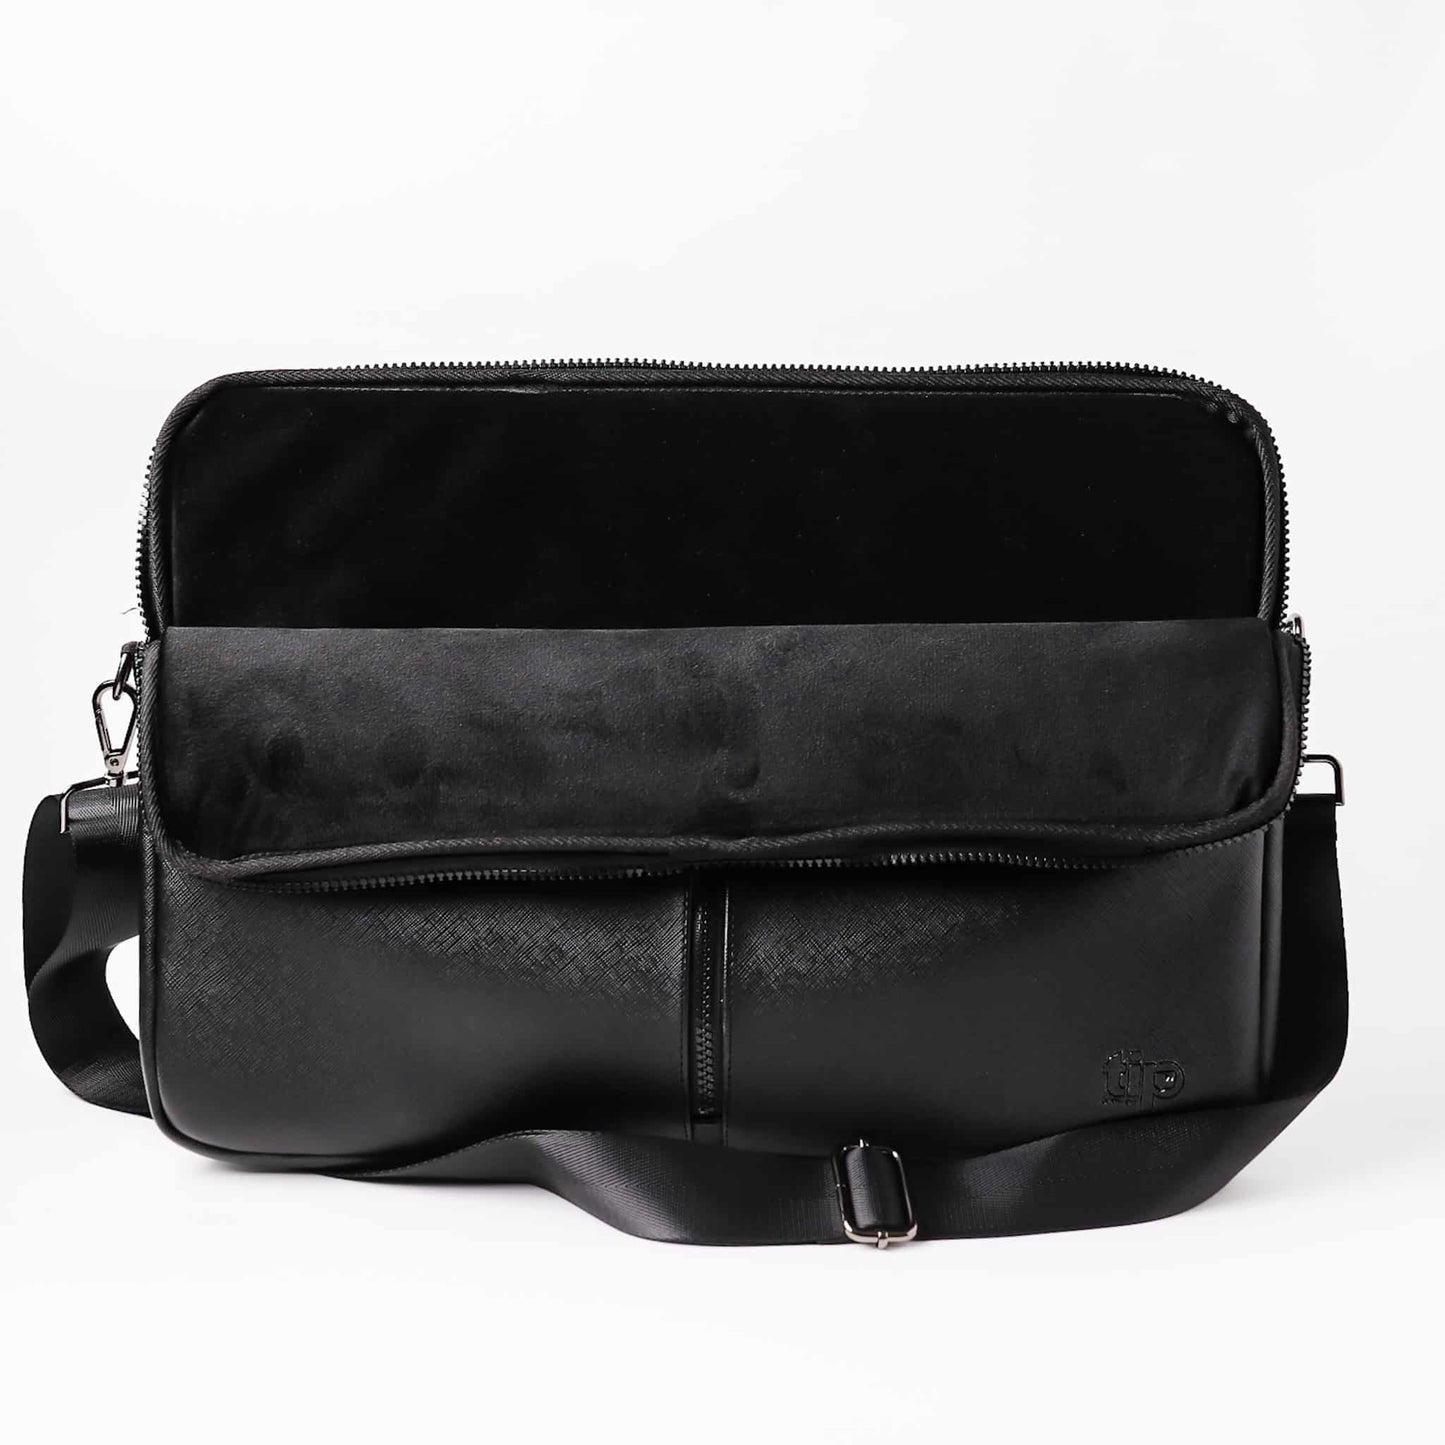 Luxury leather laptop bag